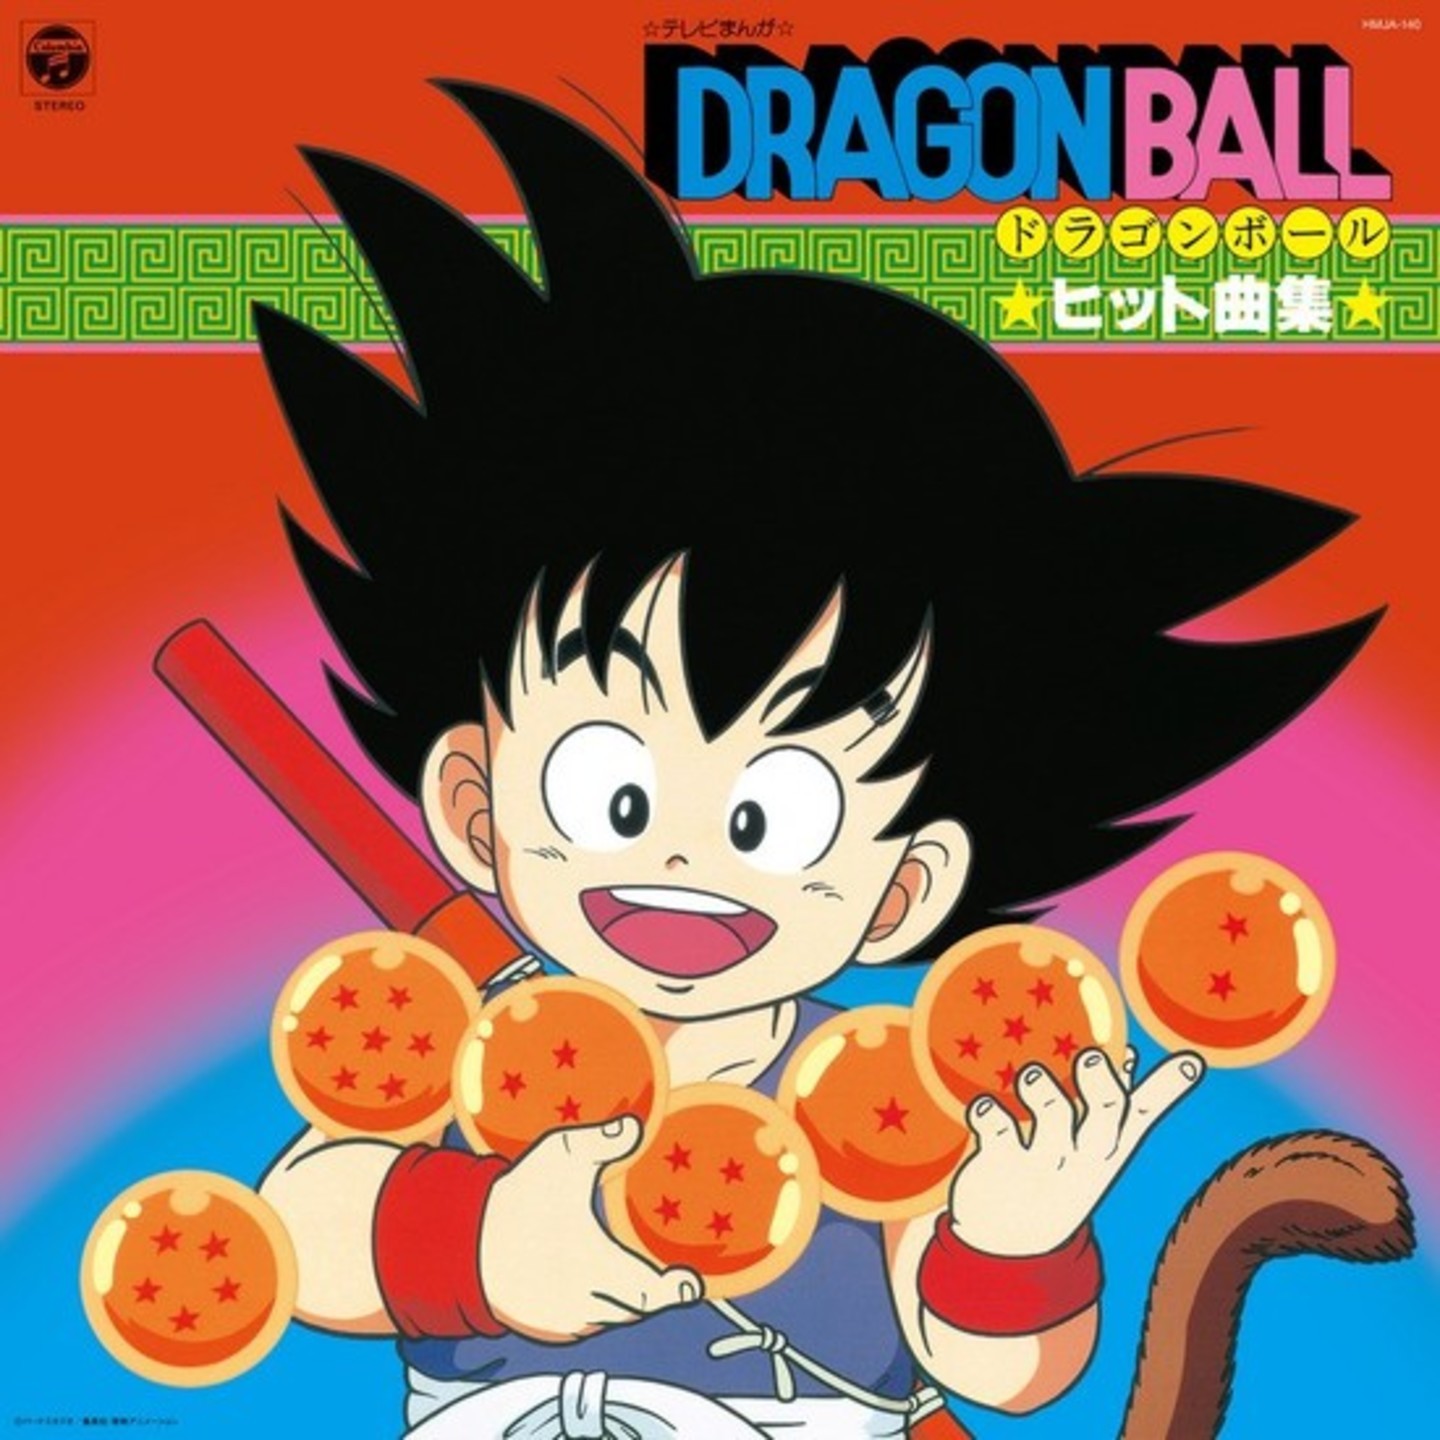 VA - TV Manga Dragon Ball Hit Song Collection LP